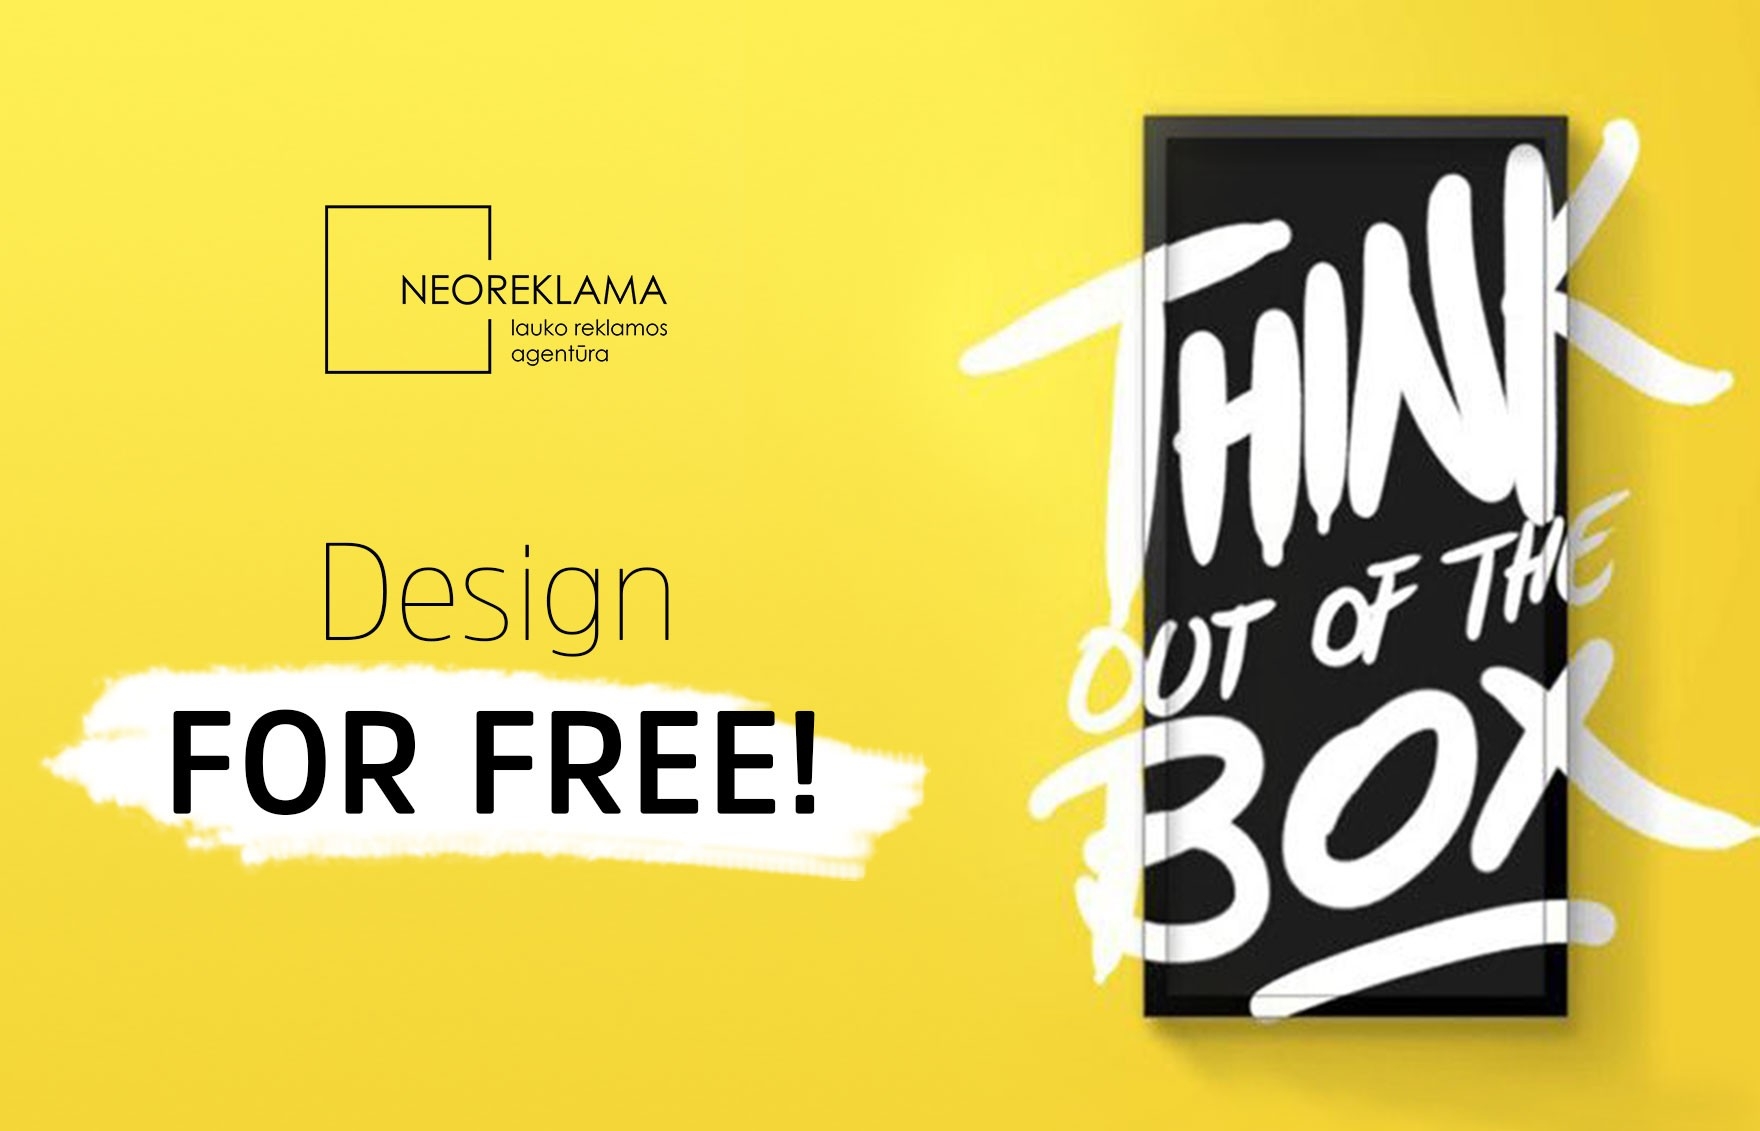 Design FOR FREE!